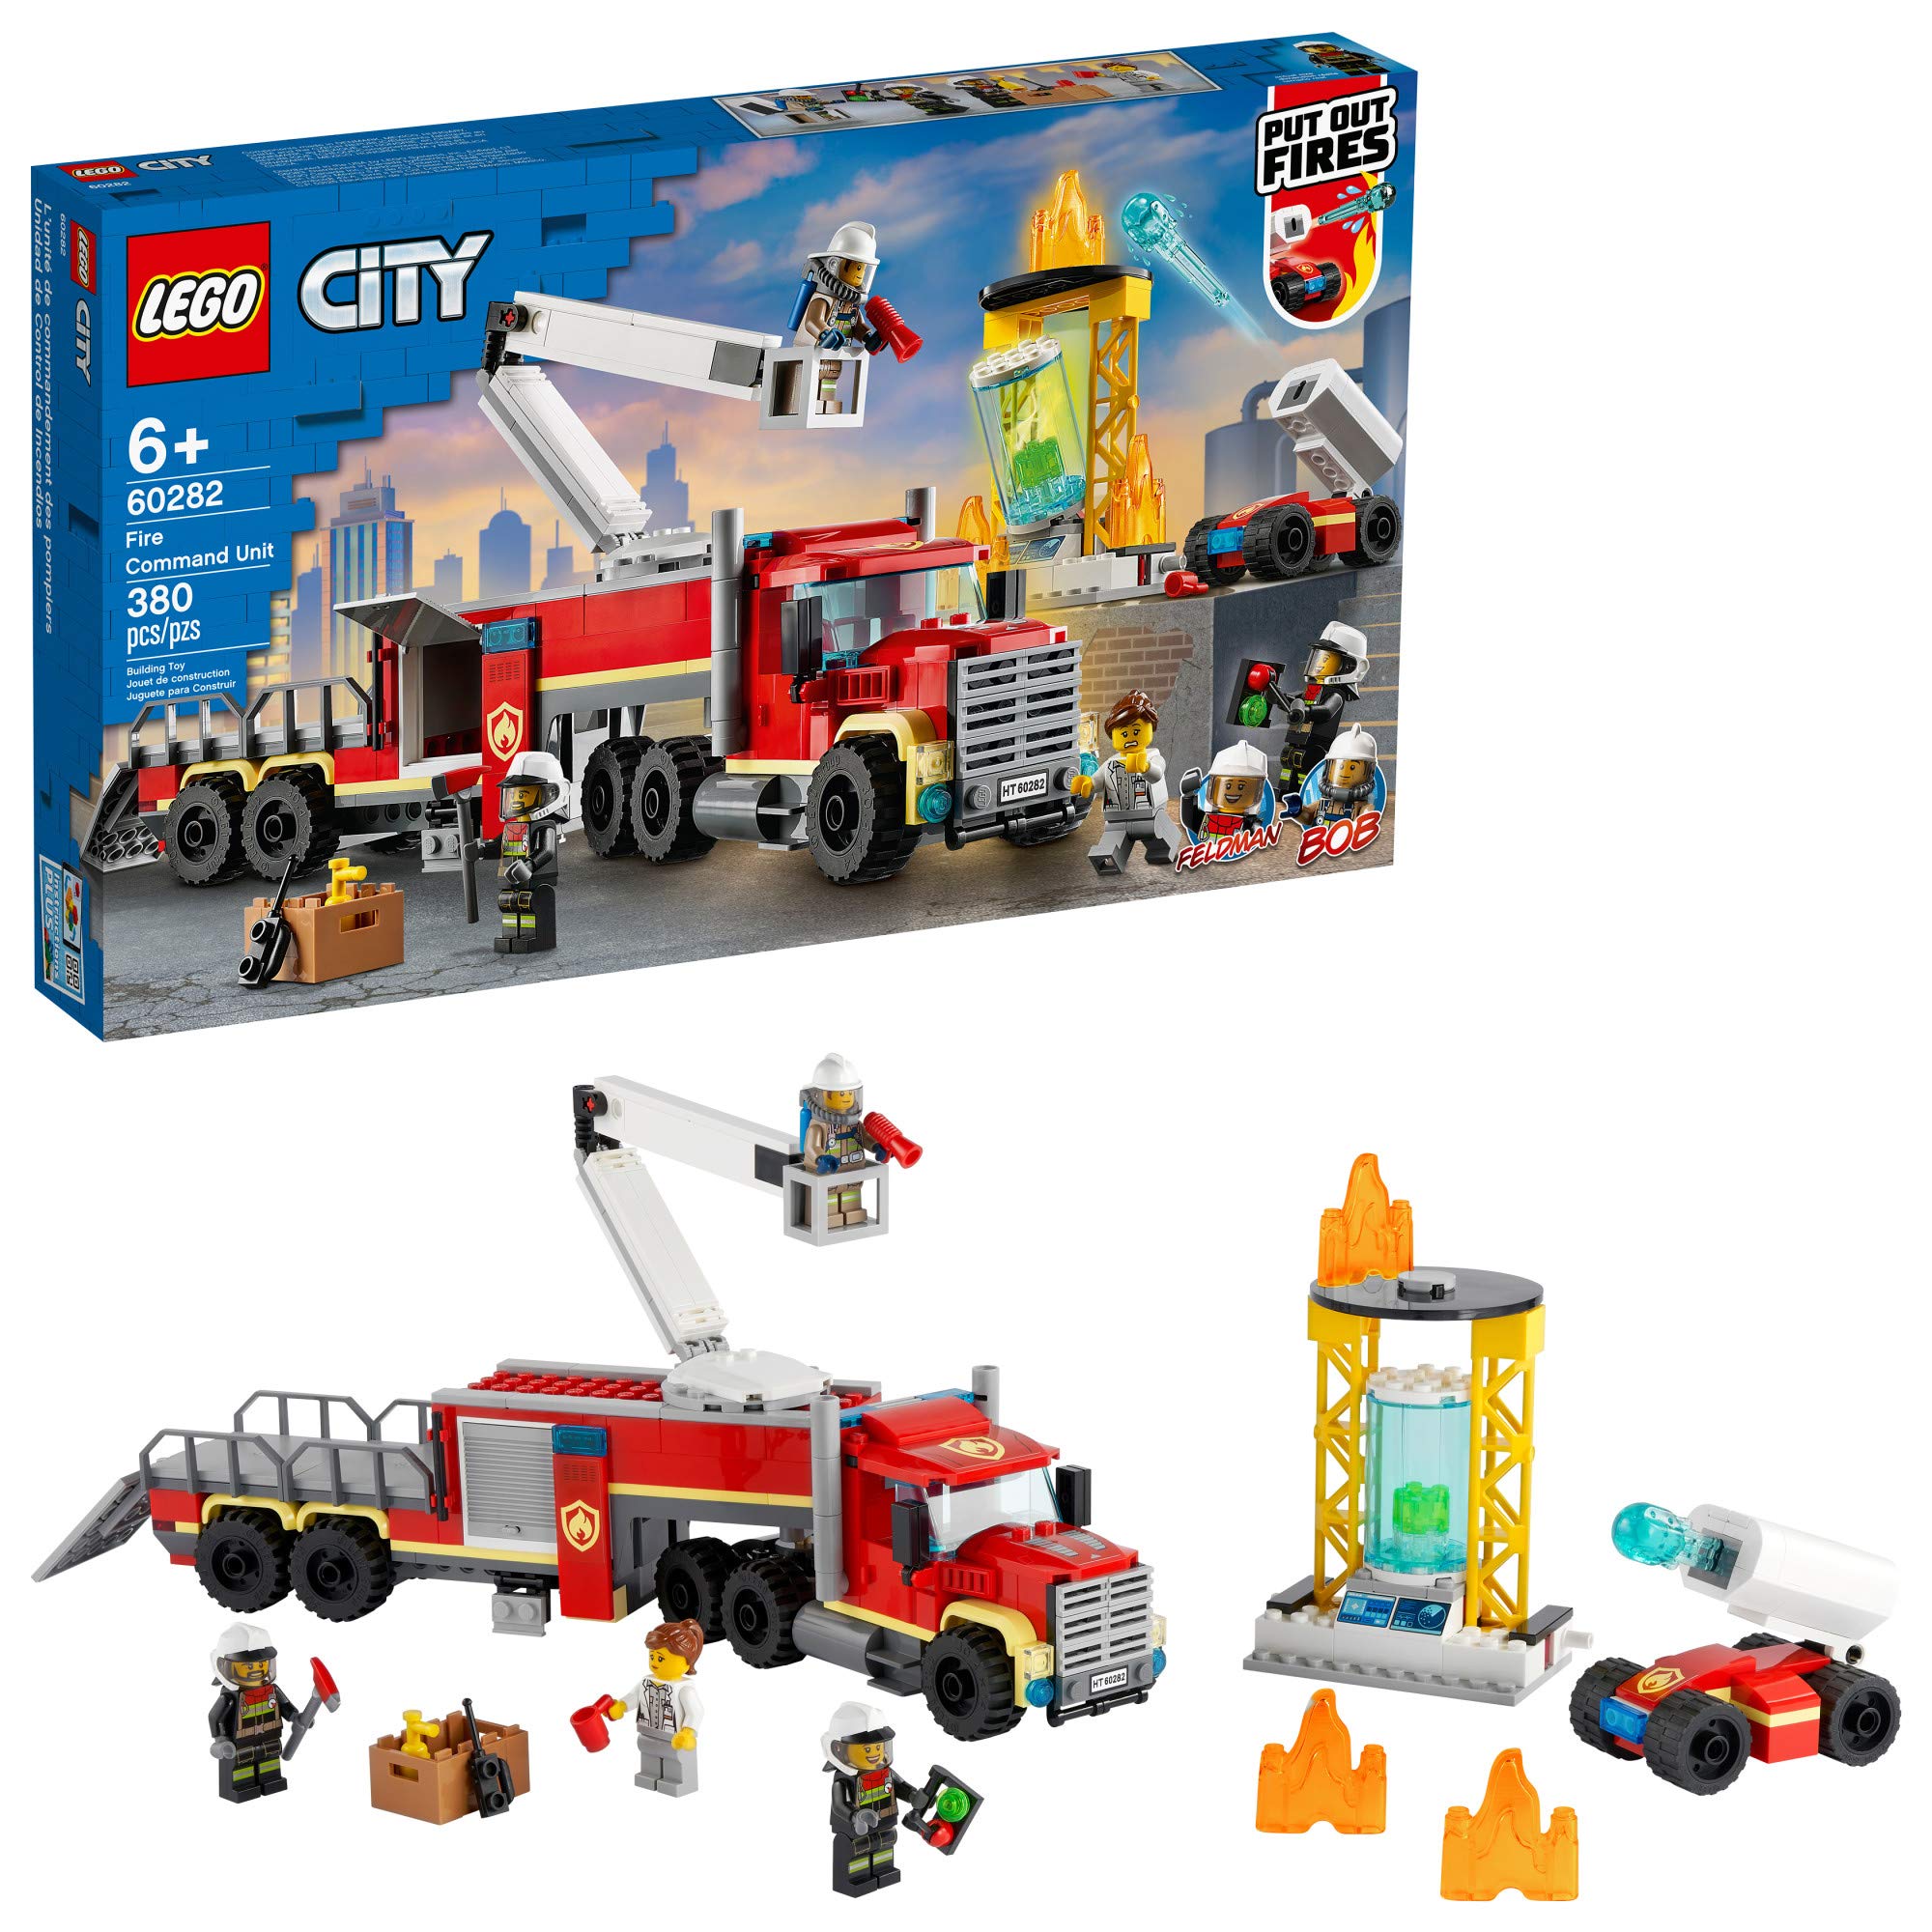 LEGO City Fire Command Unit 60282 Building Kit, New 2021 (380 Pieces) for $48 @ Amazon & Walmart